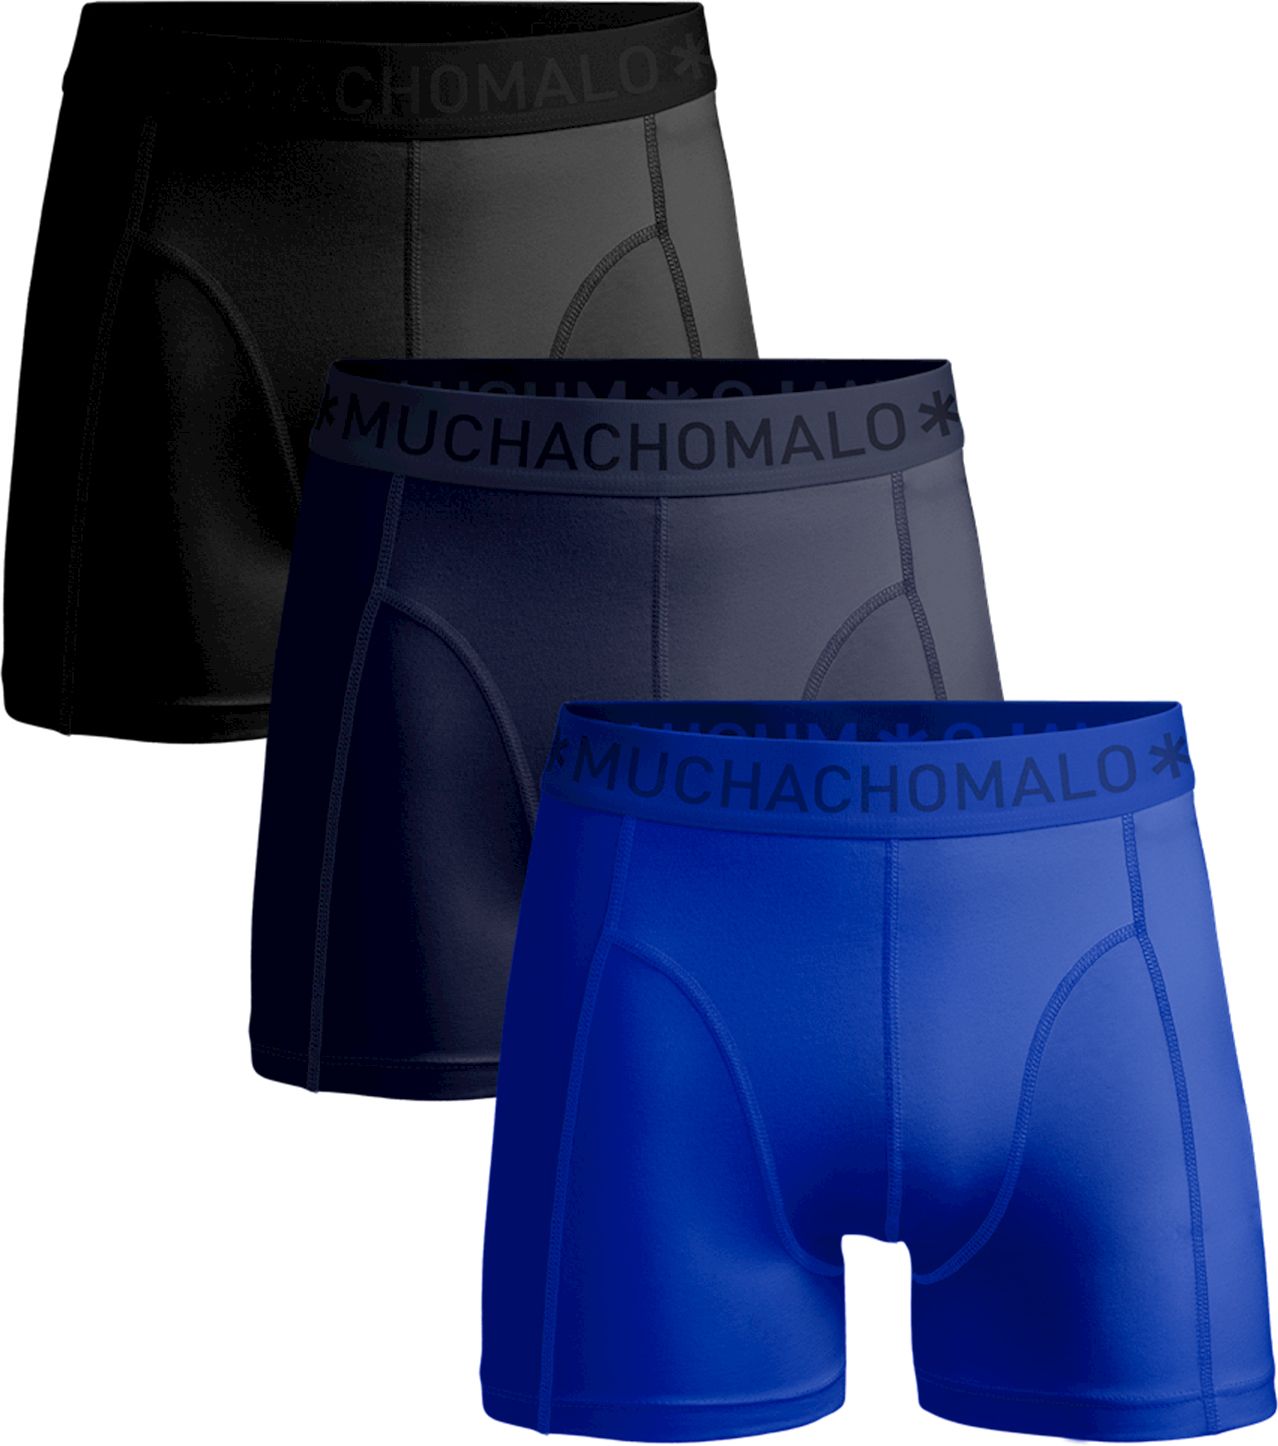 Muchachomalo Boxershorts 3-Pack Microfiber Black Dark Blue Blue size M